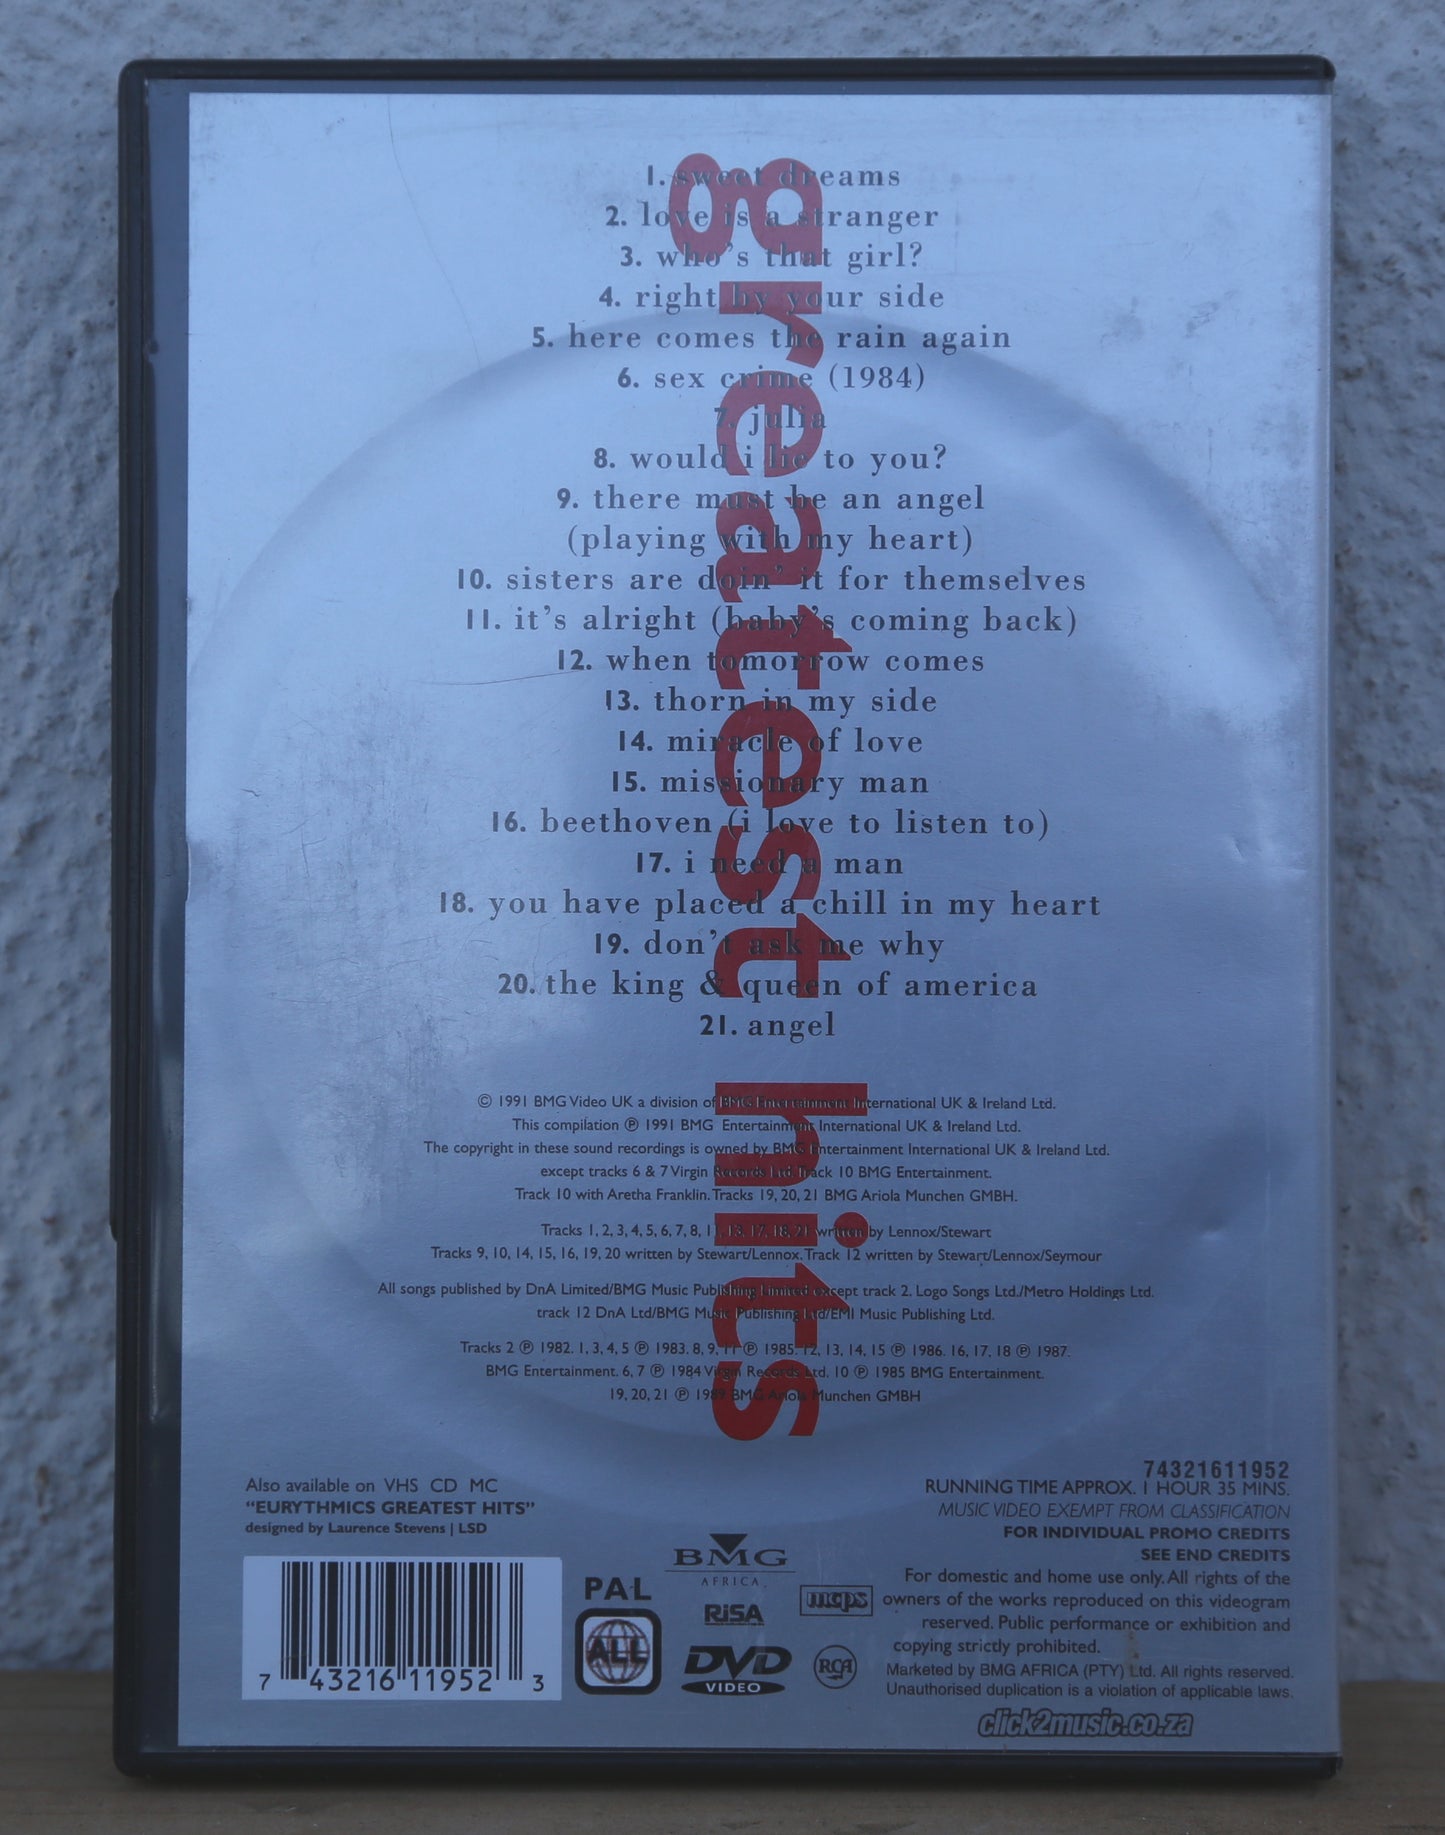 Eurythmics - Greatest Hits (dvd)